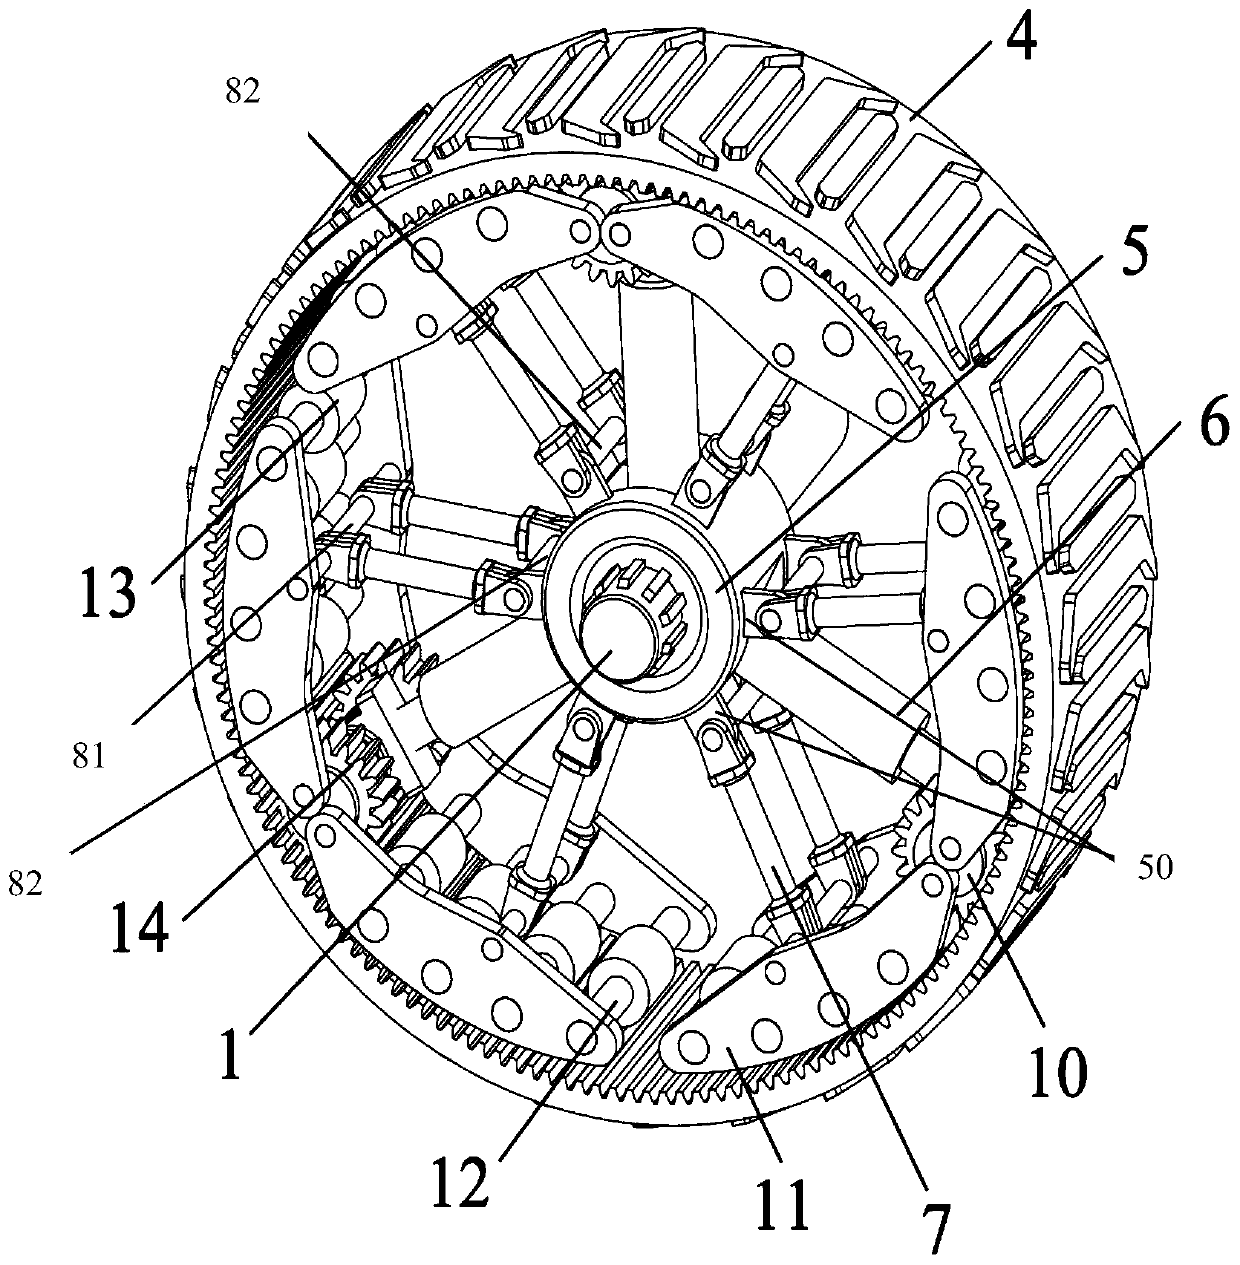 Novel wheel-track composite variable structure wheel